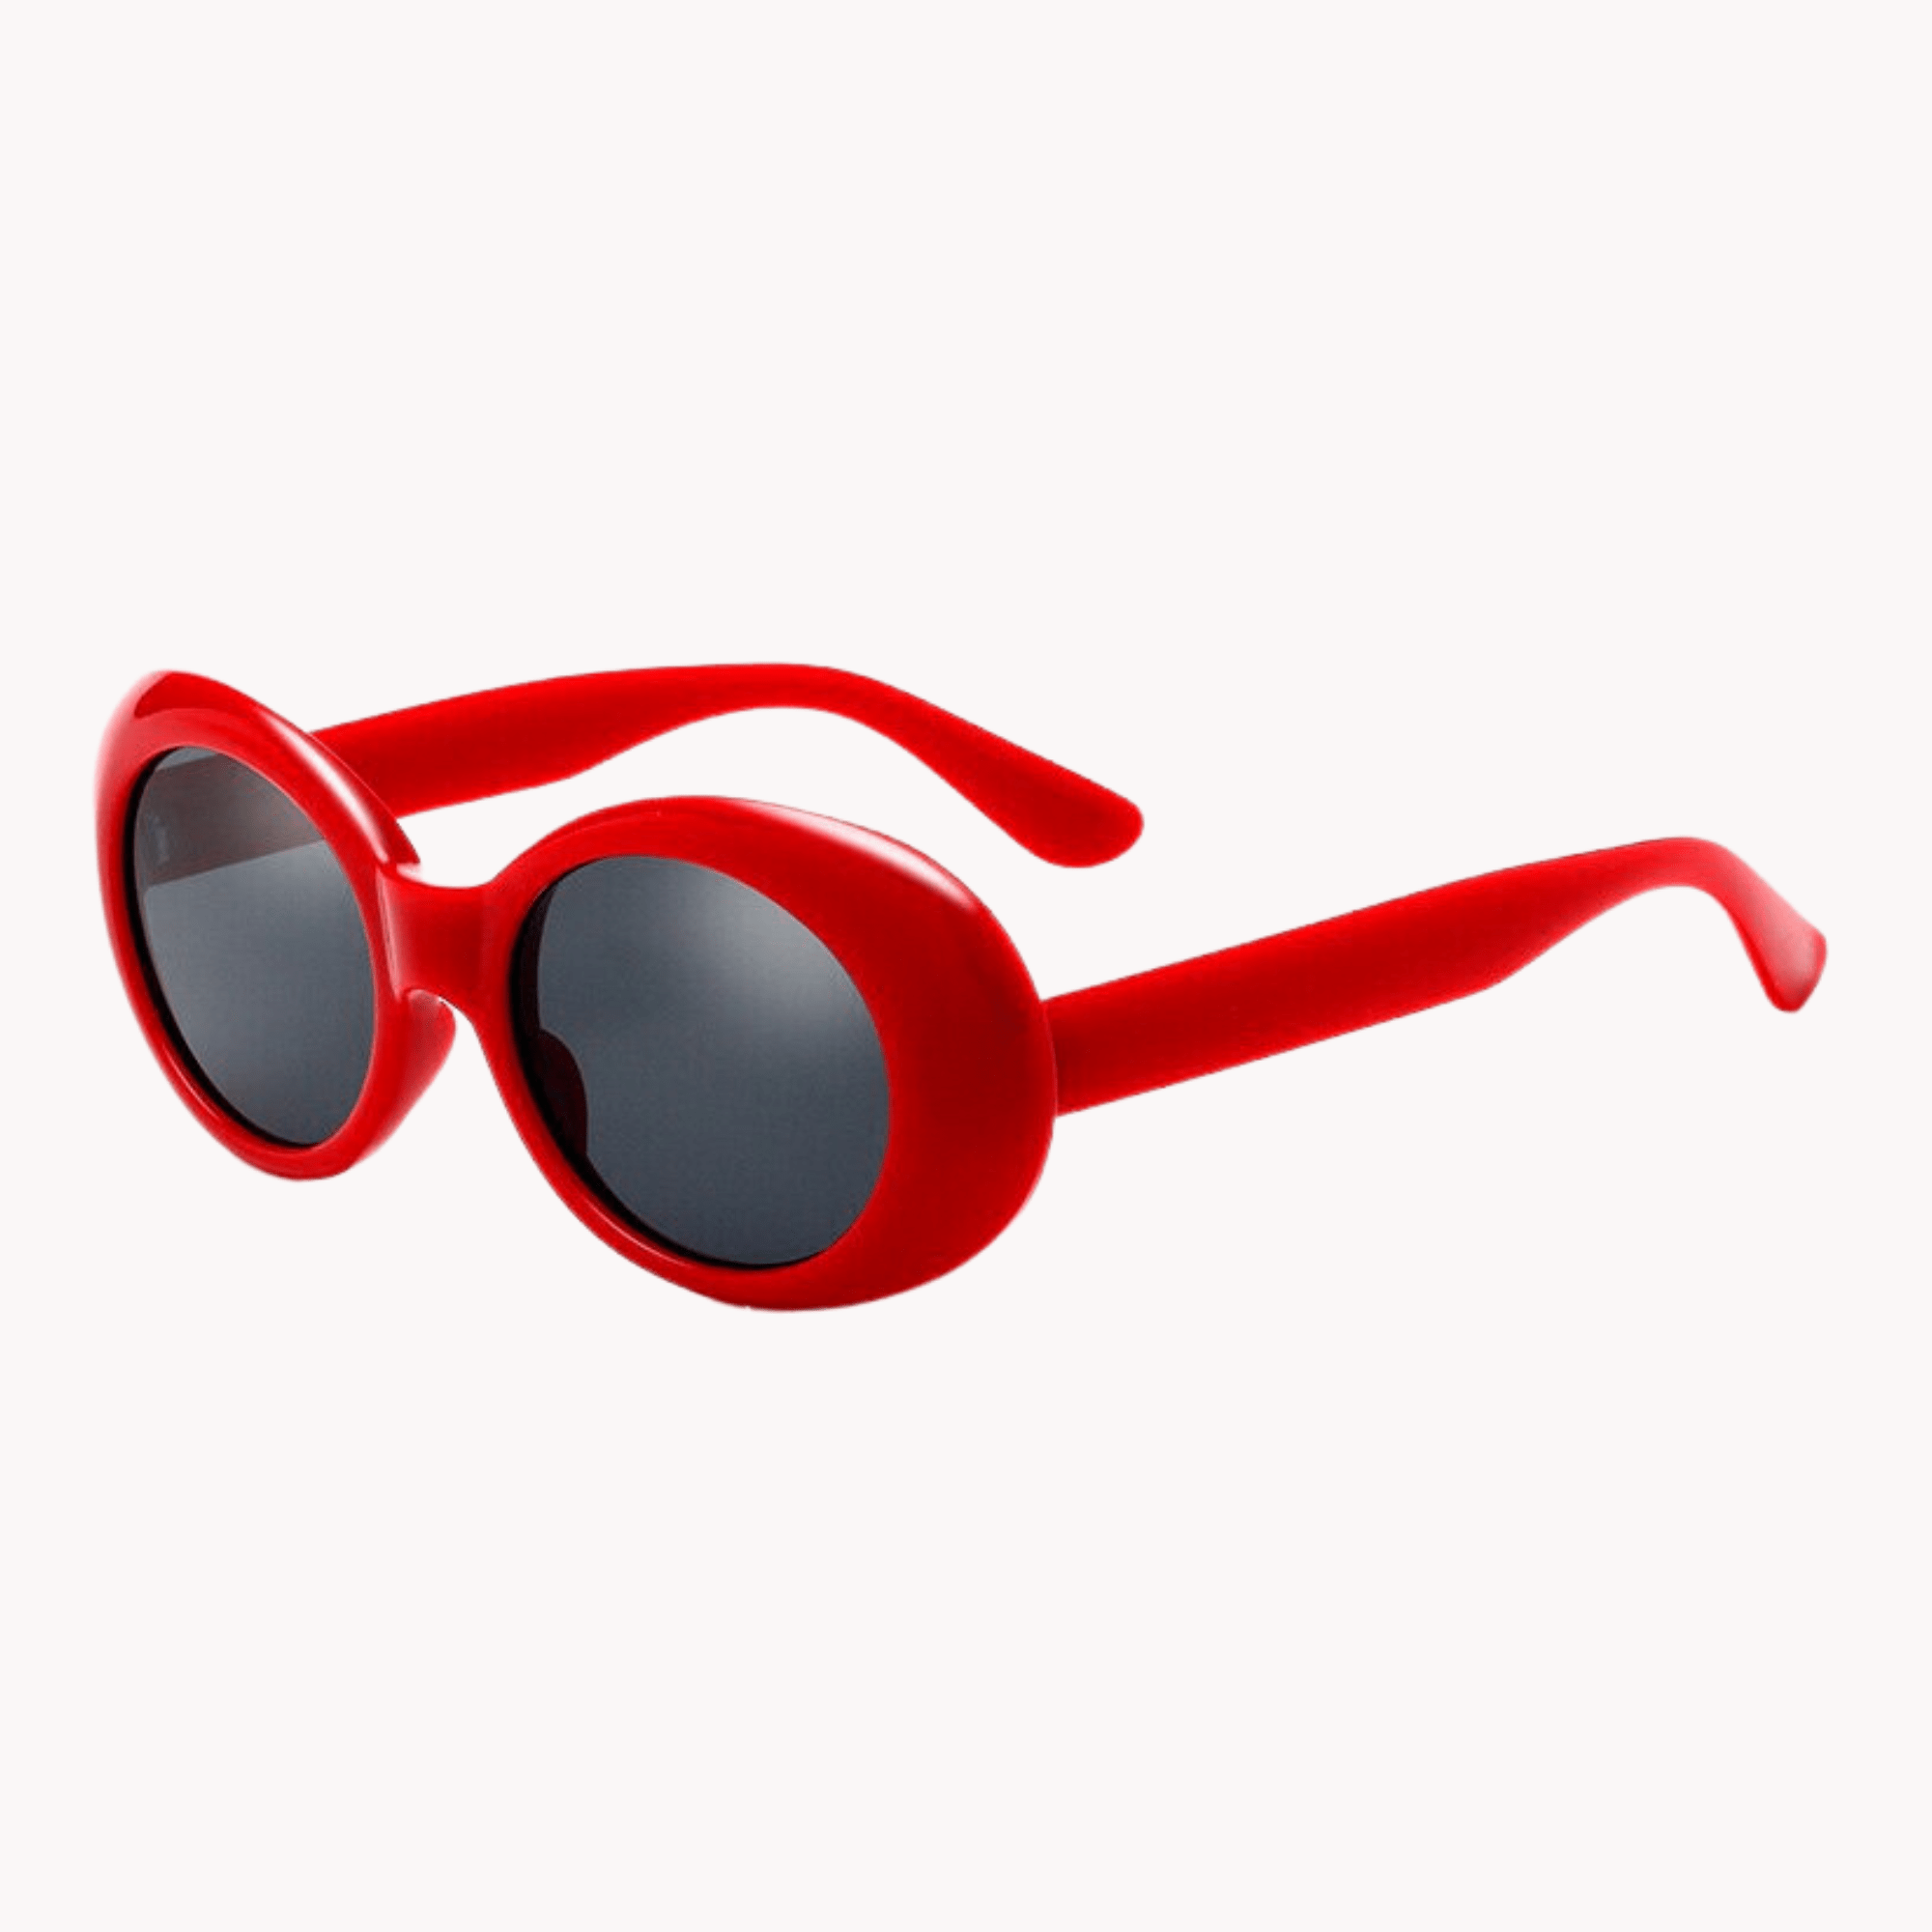 Superstar Oval Sunglasses - Kelly Obi New York